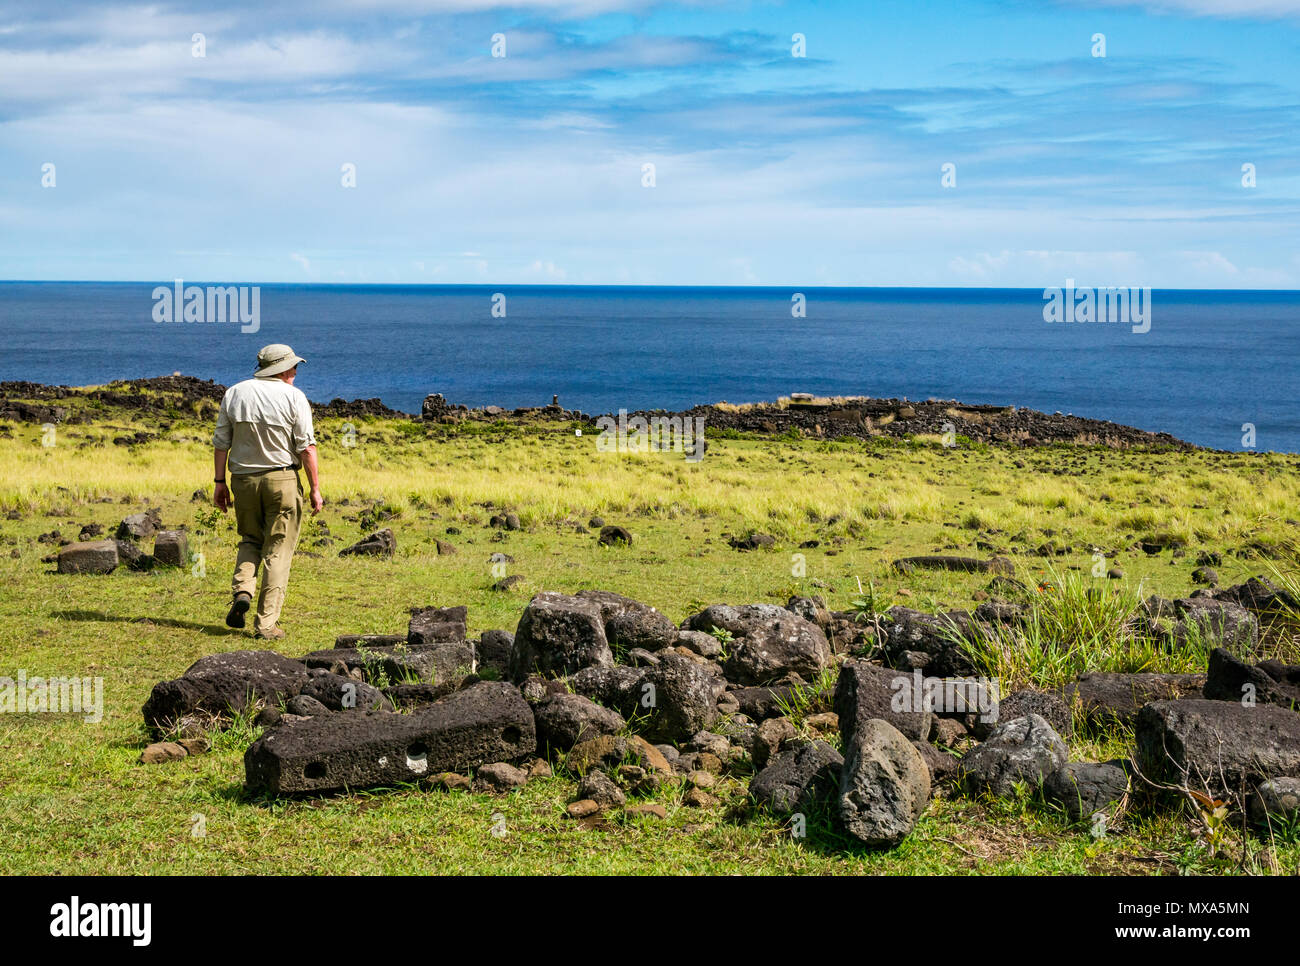 Senior male tourist in khaki clothing walking among remains of traditional stone village houses, Te Peu, Easter Island, Rapa Nui, Chile Stock Photo